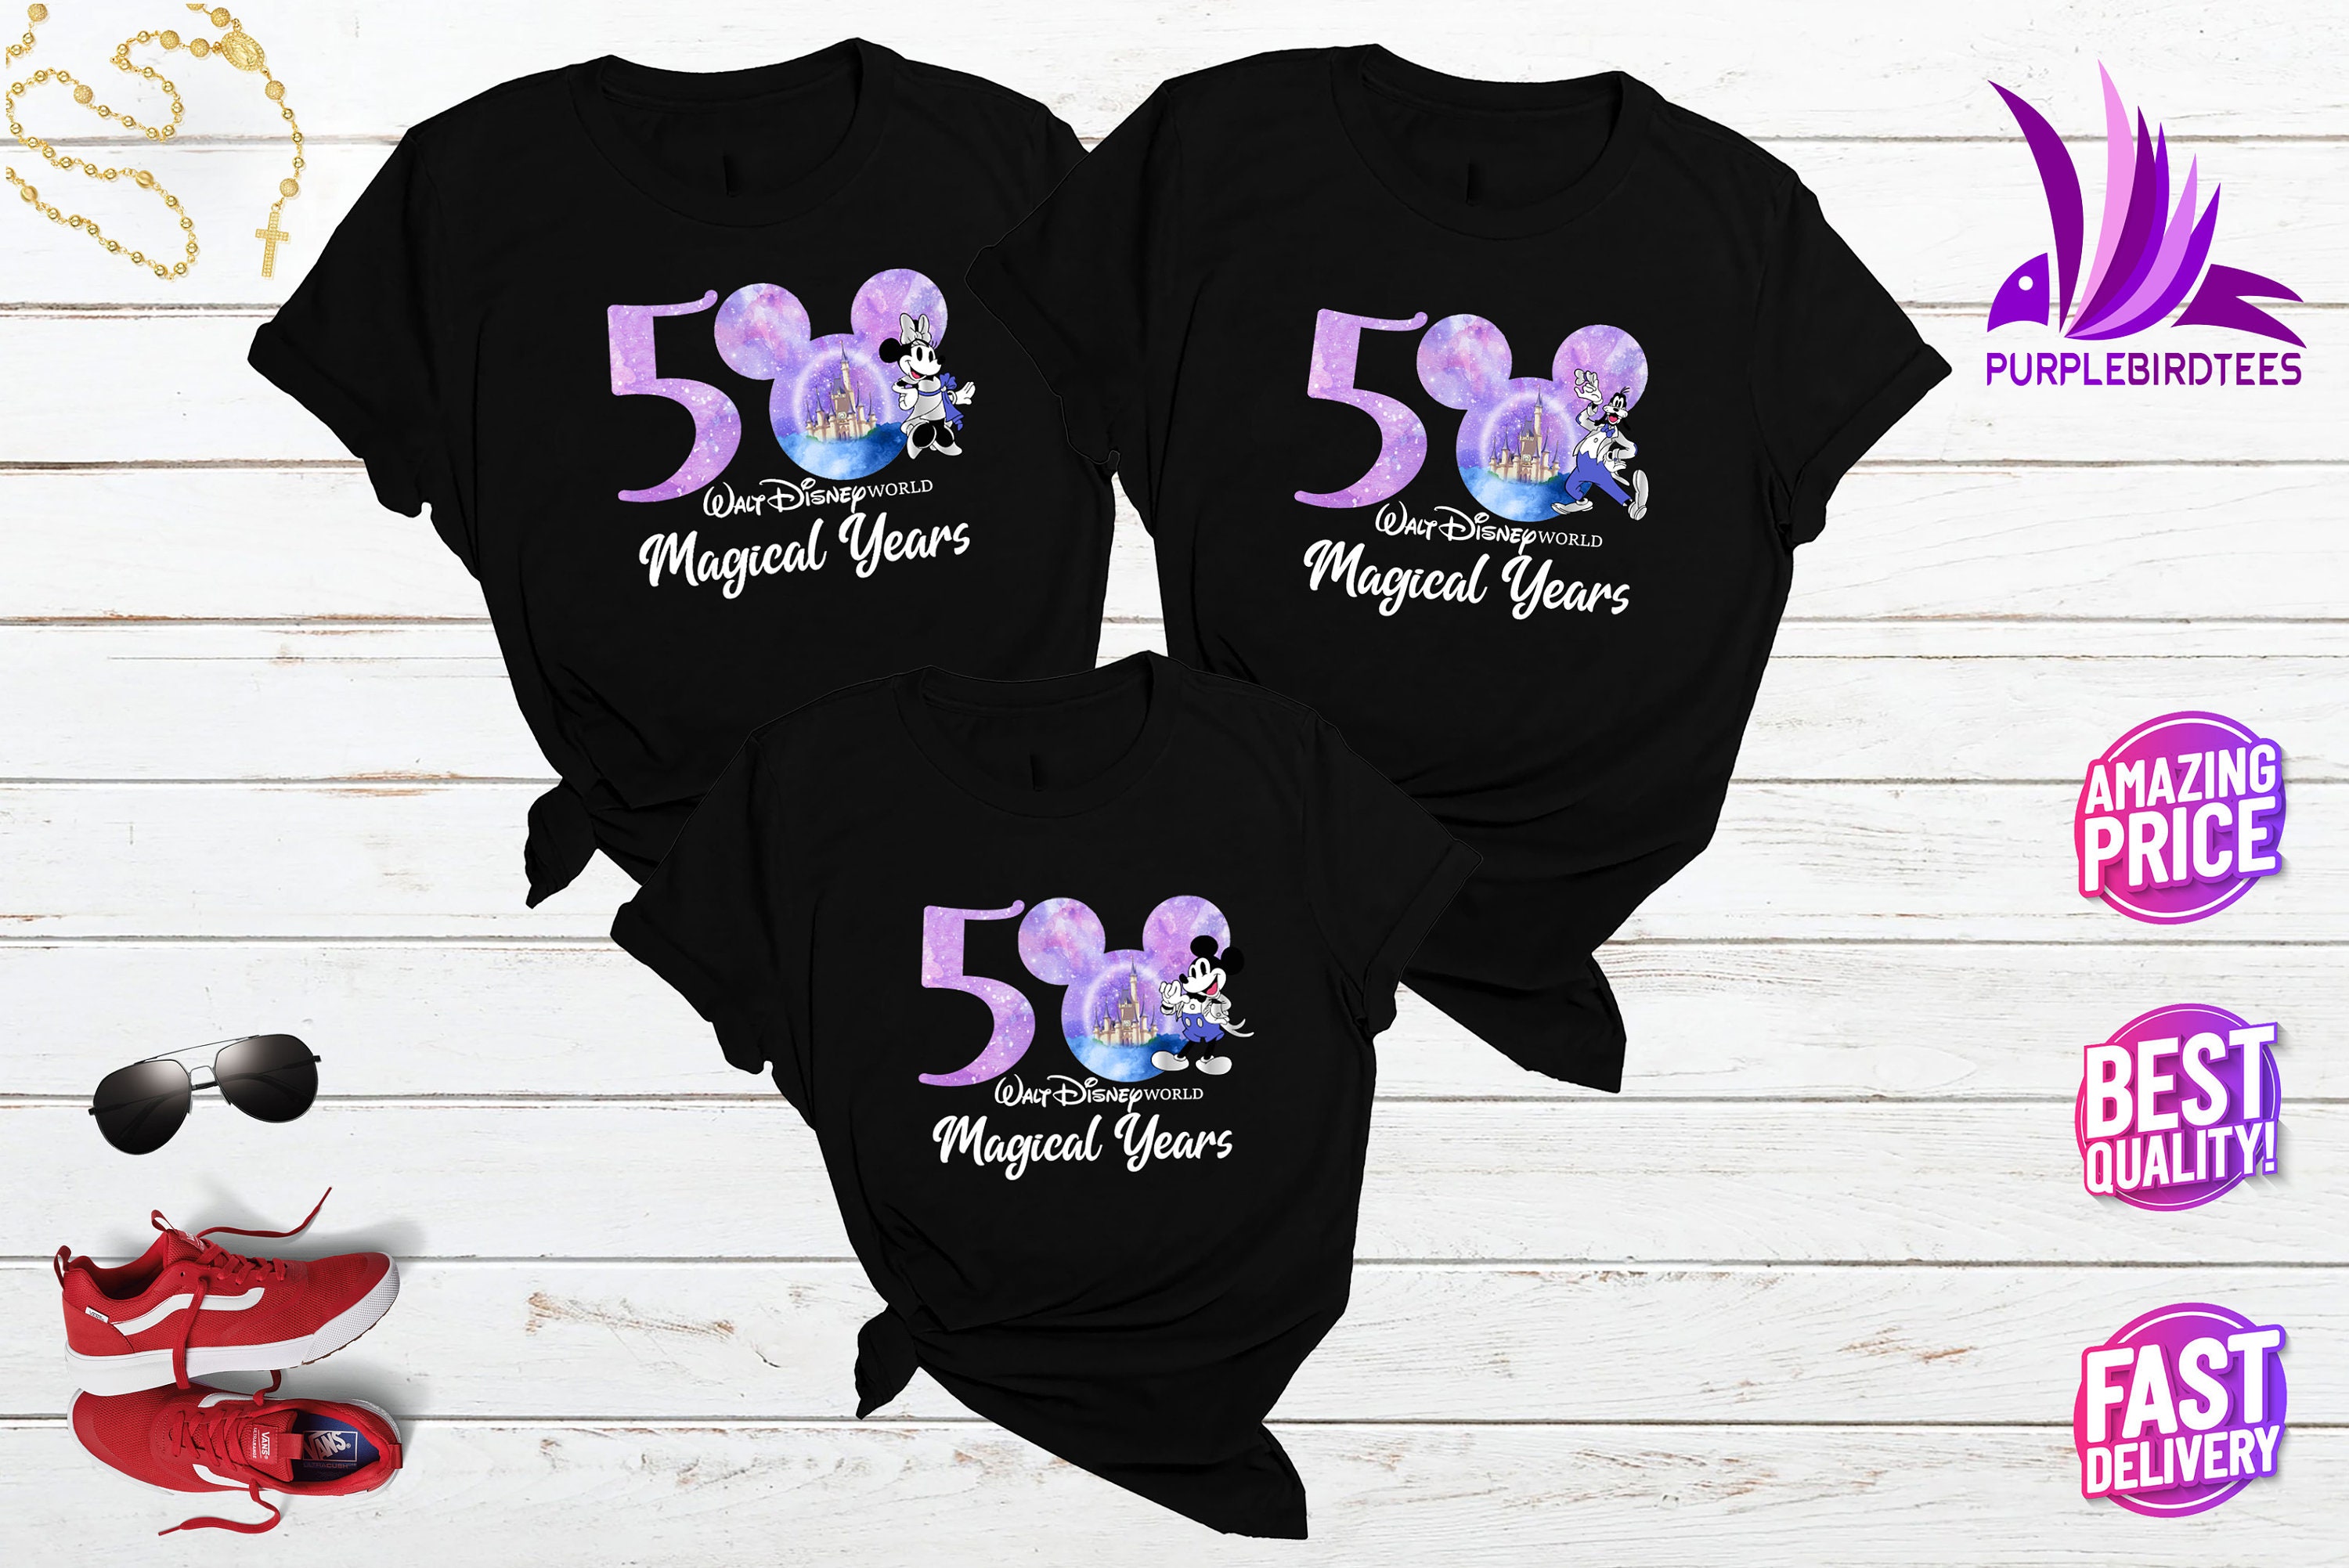 Discover Disney Anniversary, 50 Years, Magical Years Shirt, Magic Kingdom Shirt, Disney World Shirt